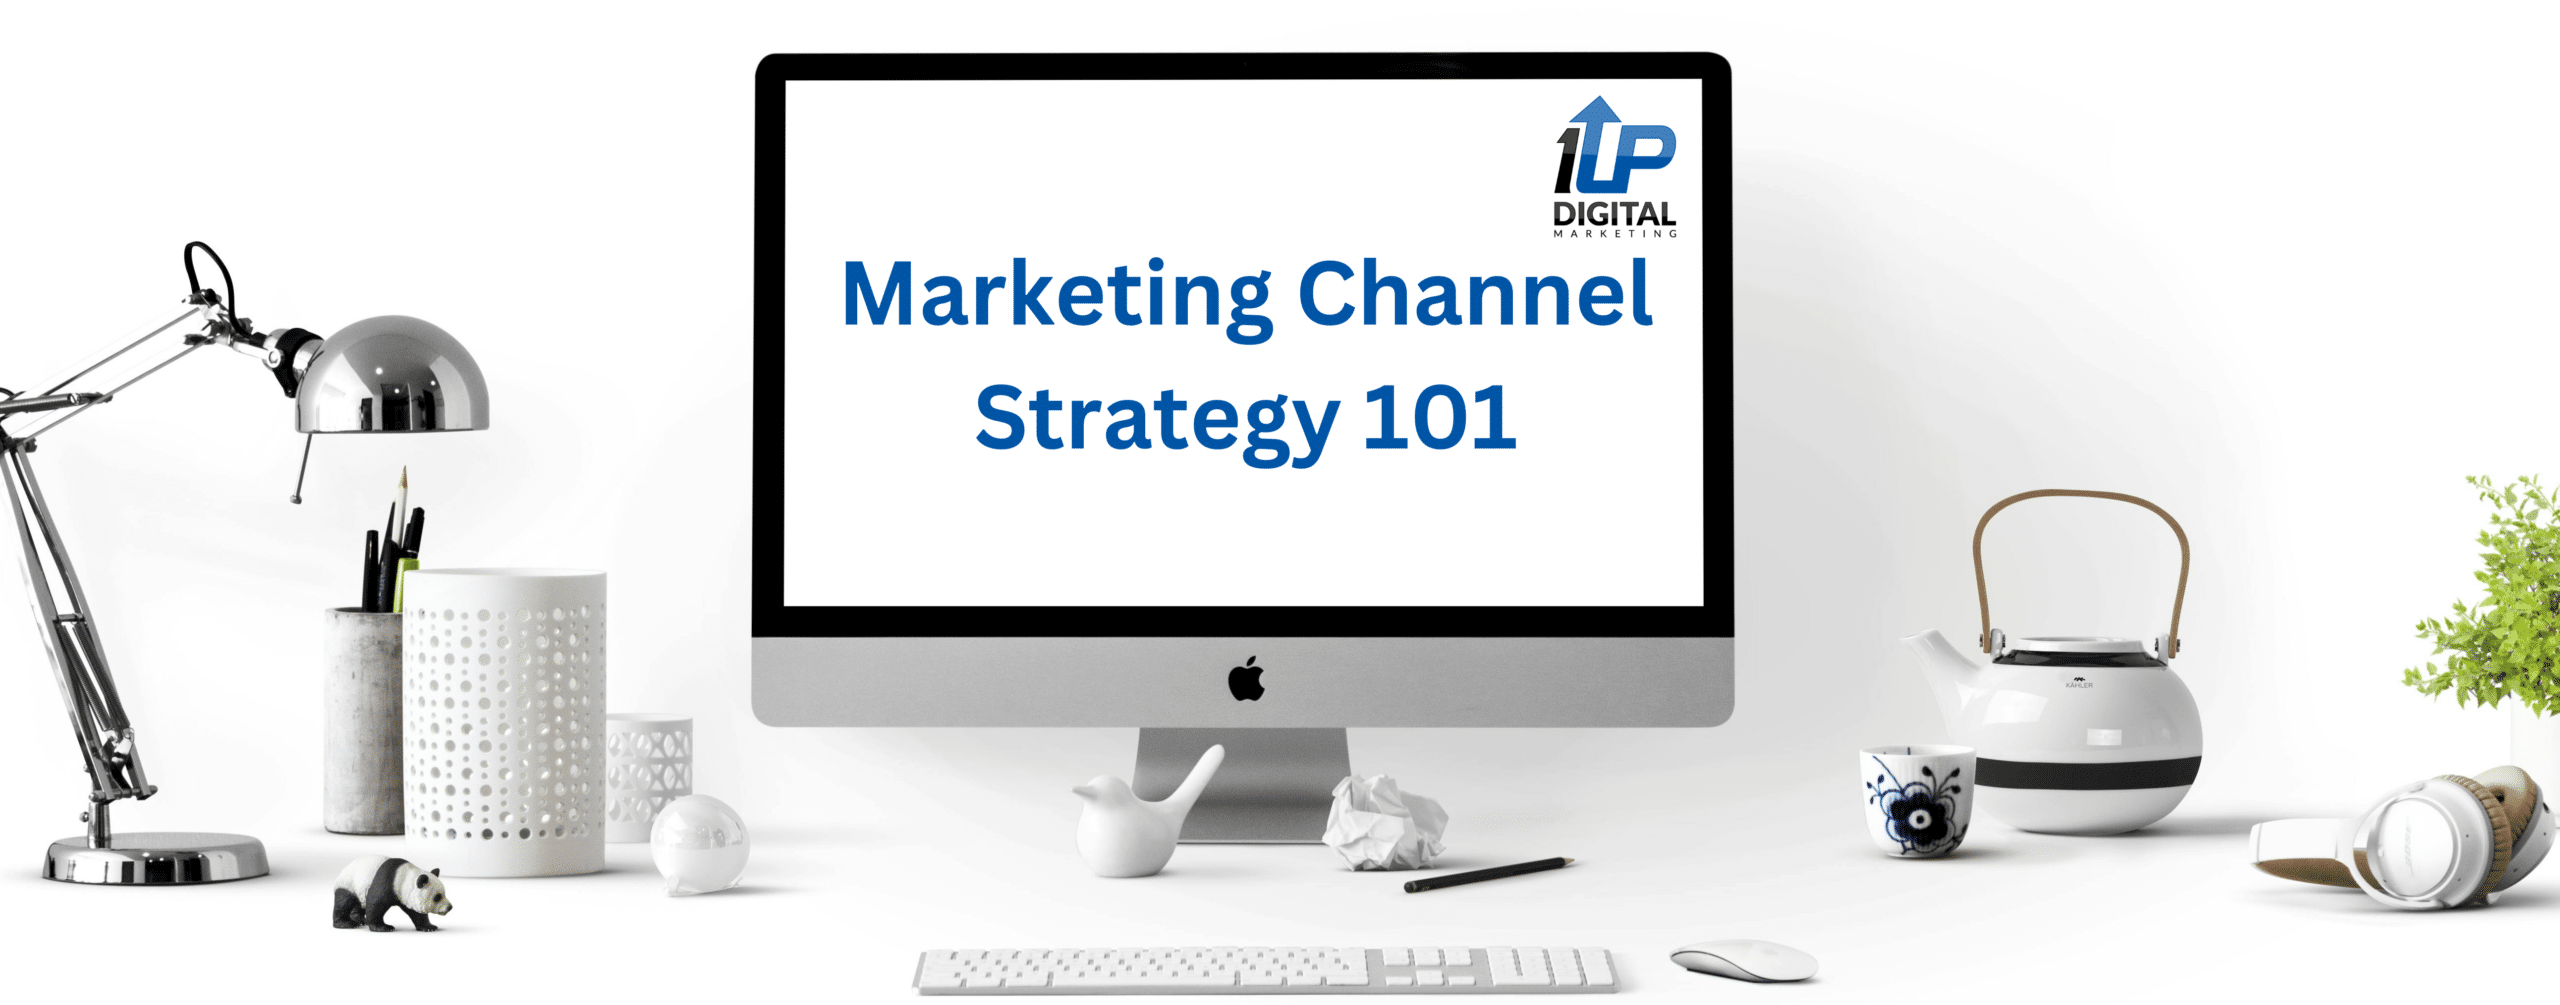 marketing channel strategy